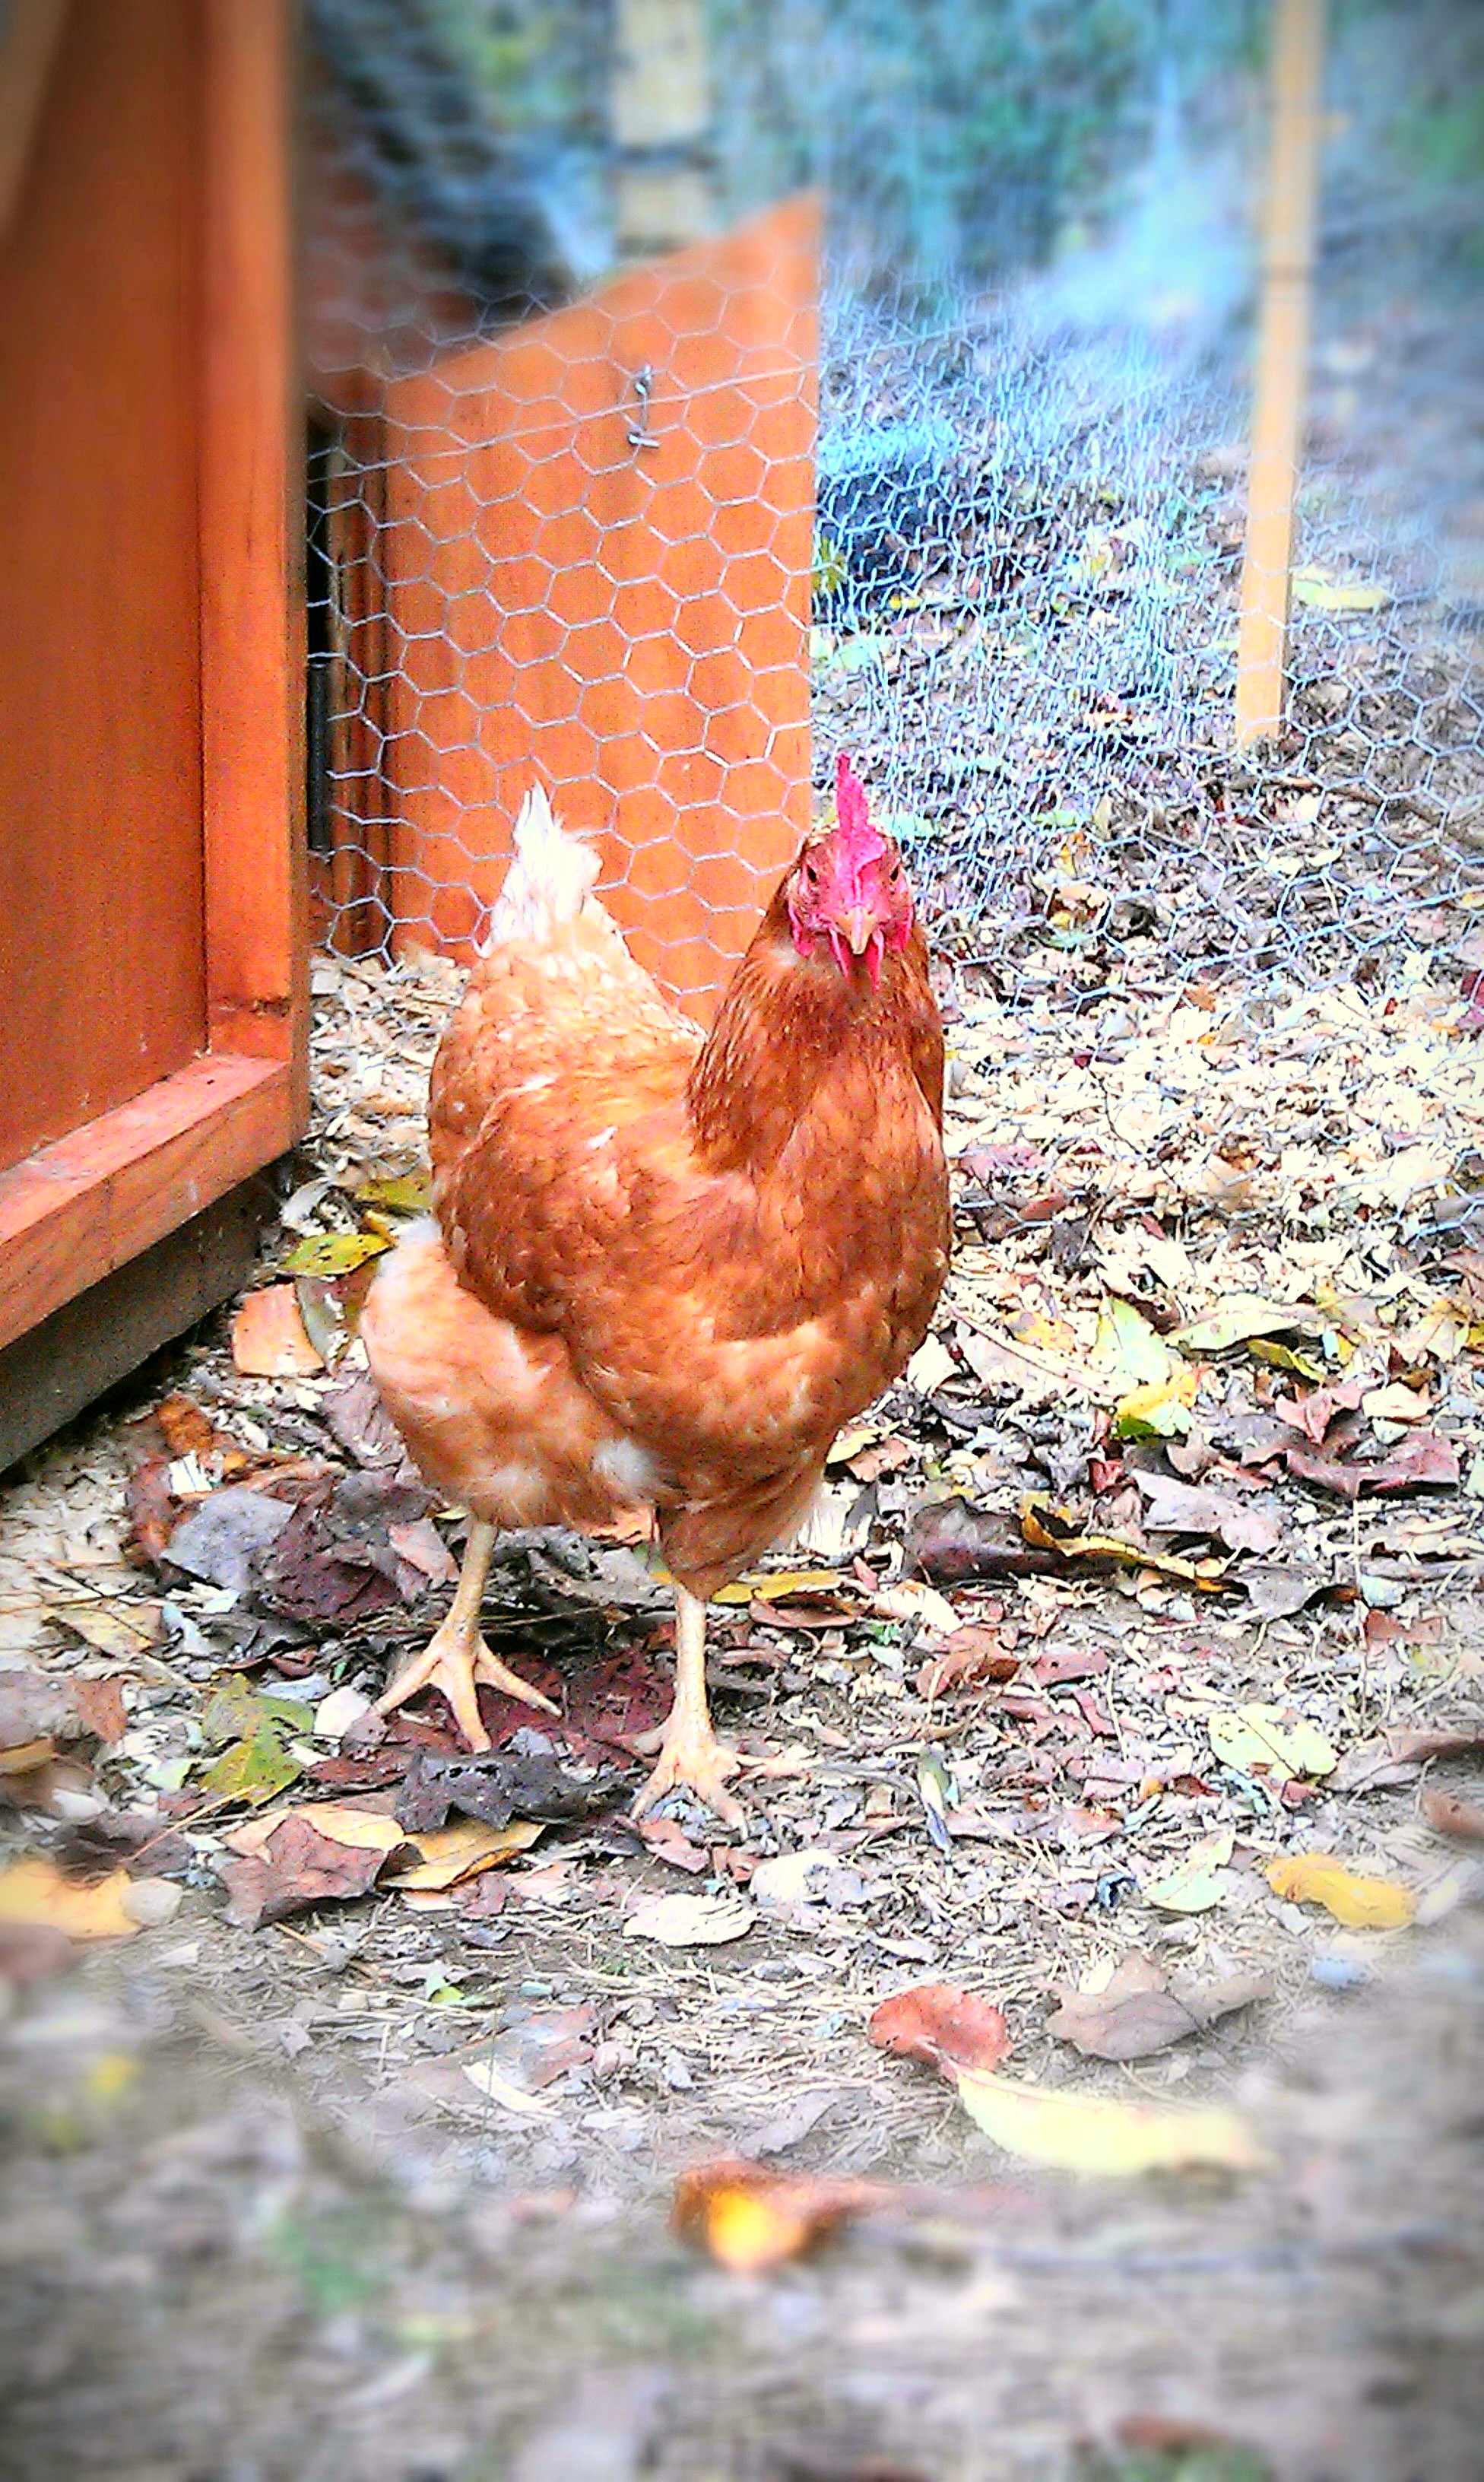 Fall 2013. Hey, good lookin'! Shelly struttin' her stuff. She's the boss hen & she knows it;)